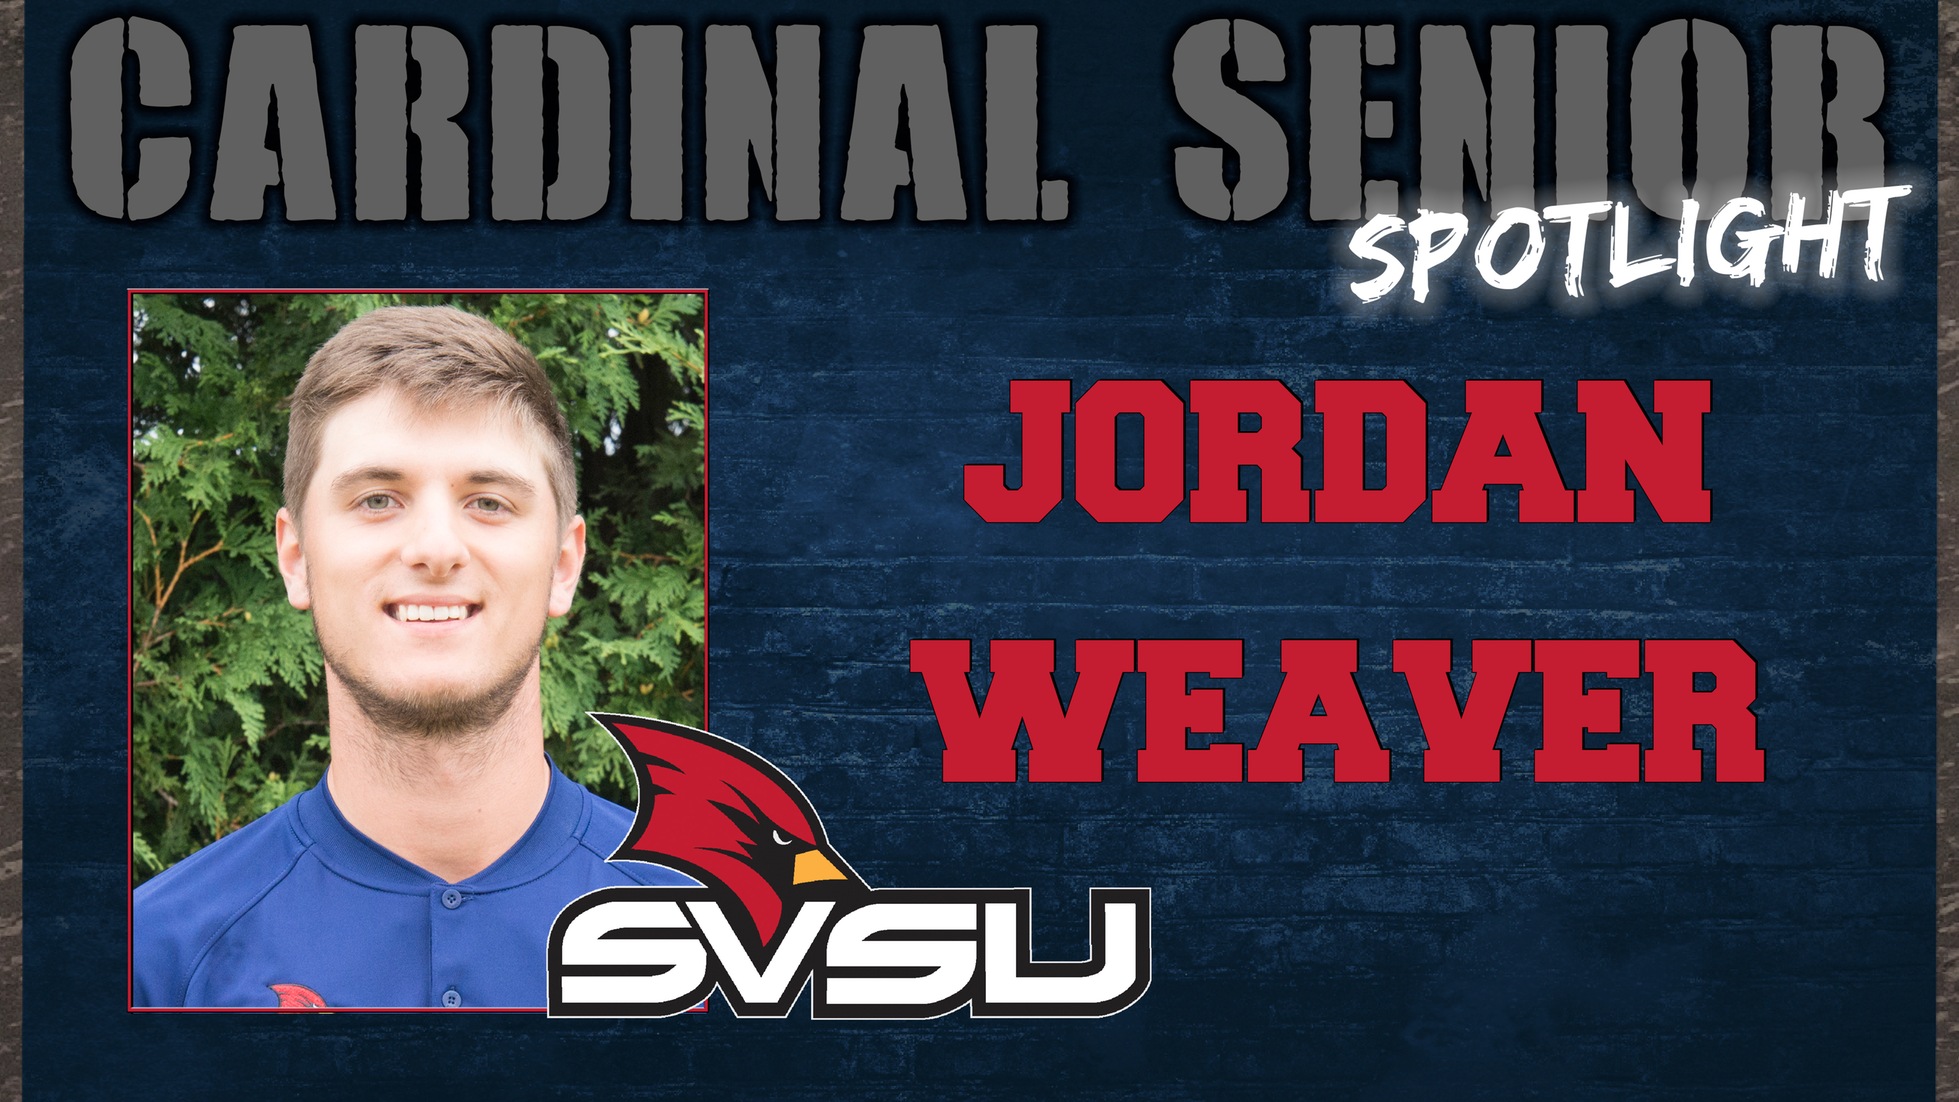 SVSU Cardinal Senior Spotlight - Jordan Weaver